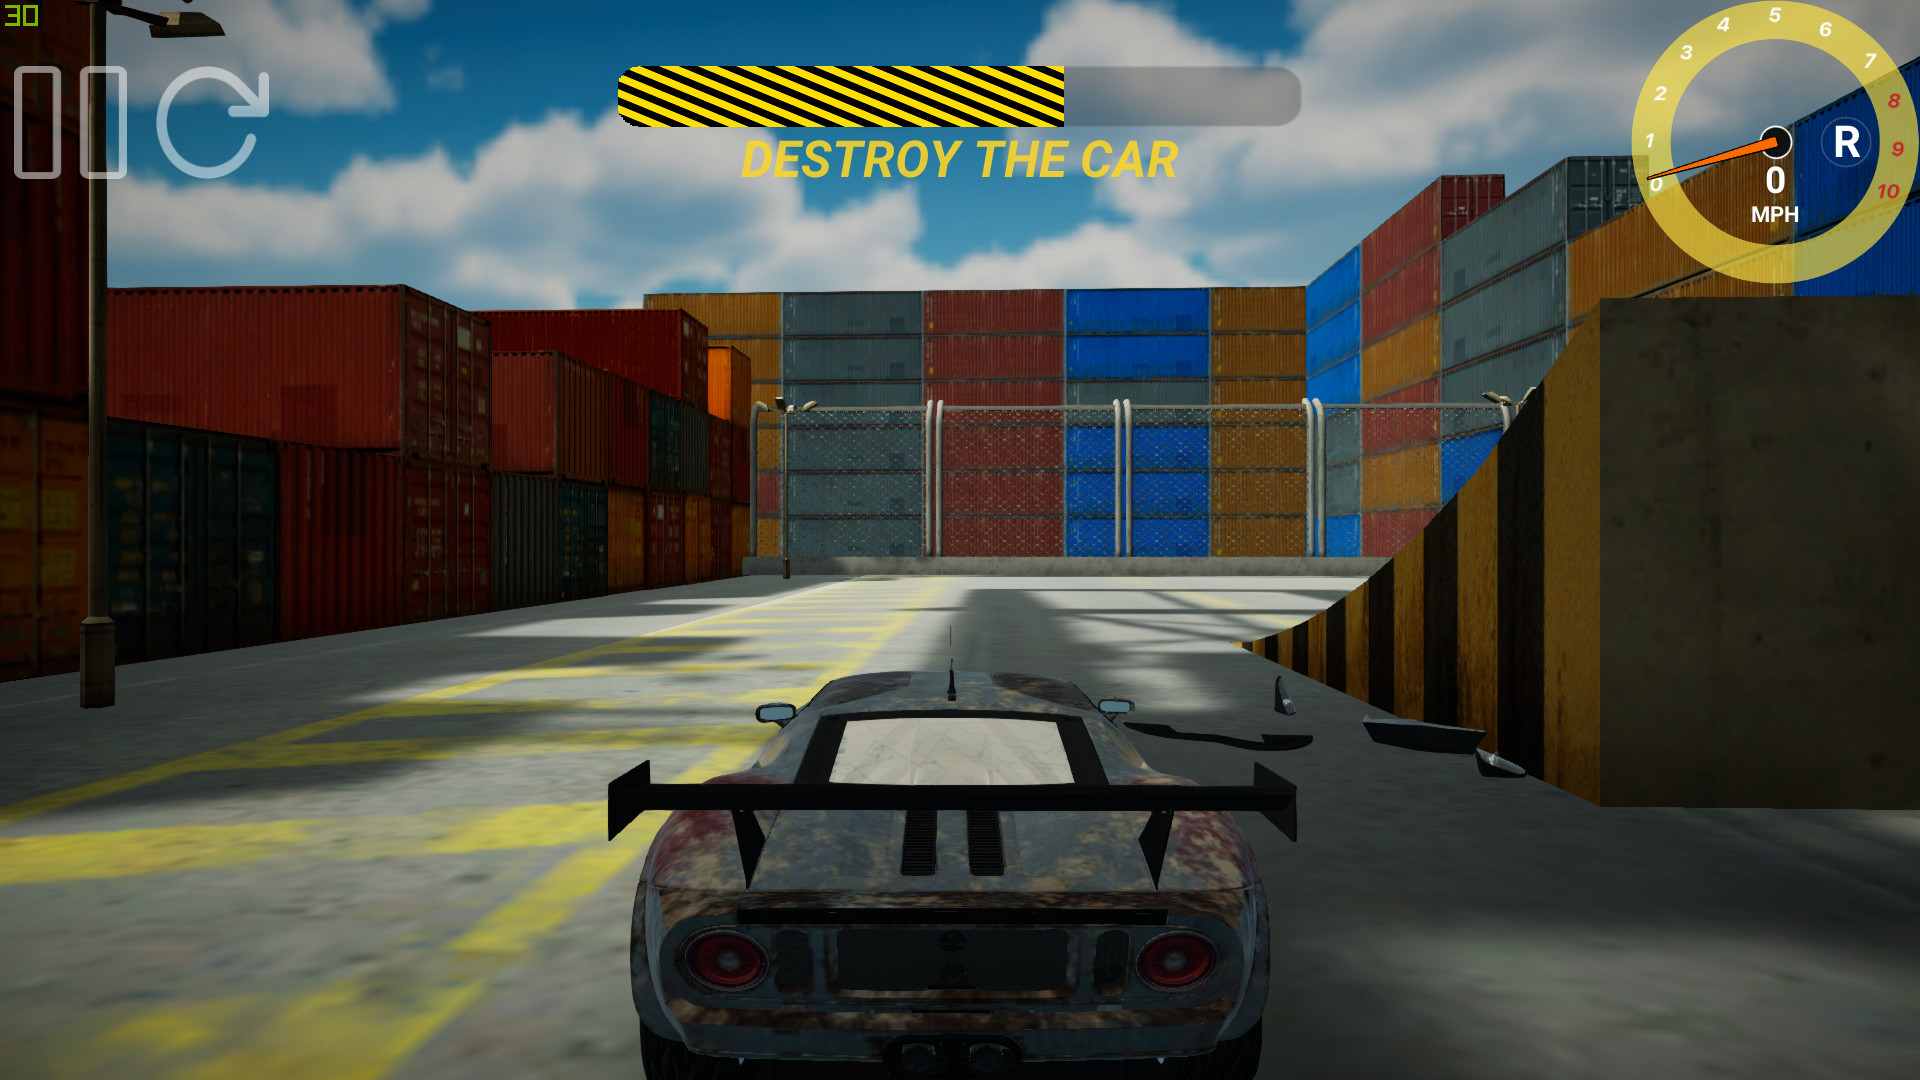 Car Crash Online on Steam